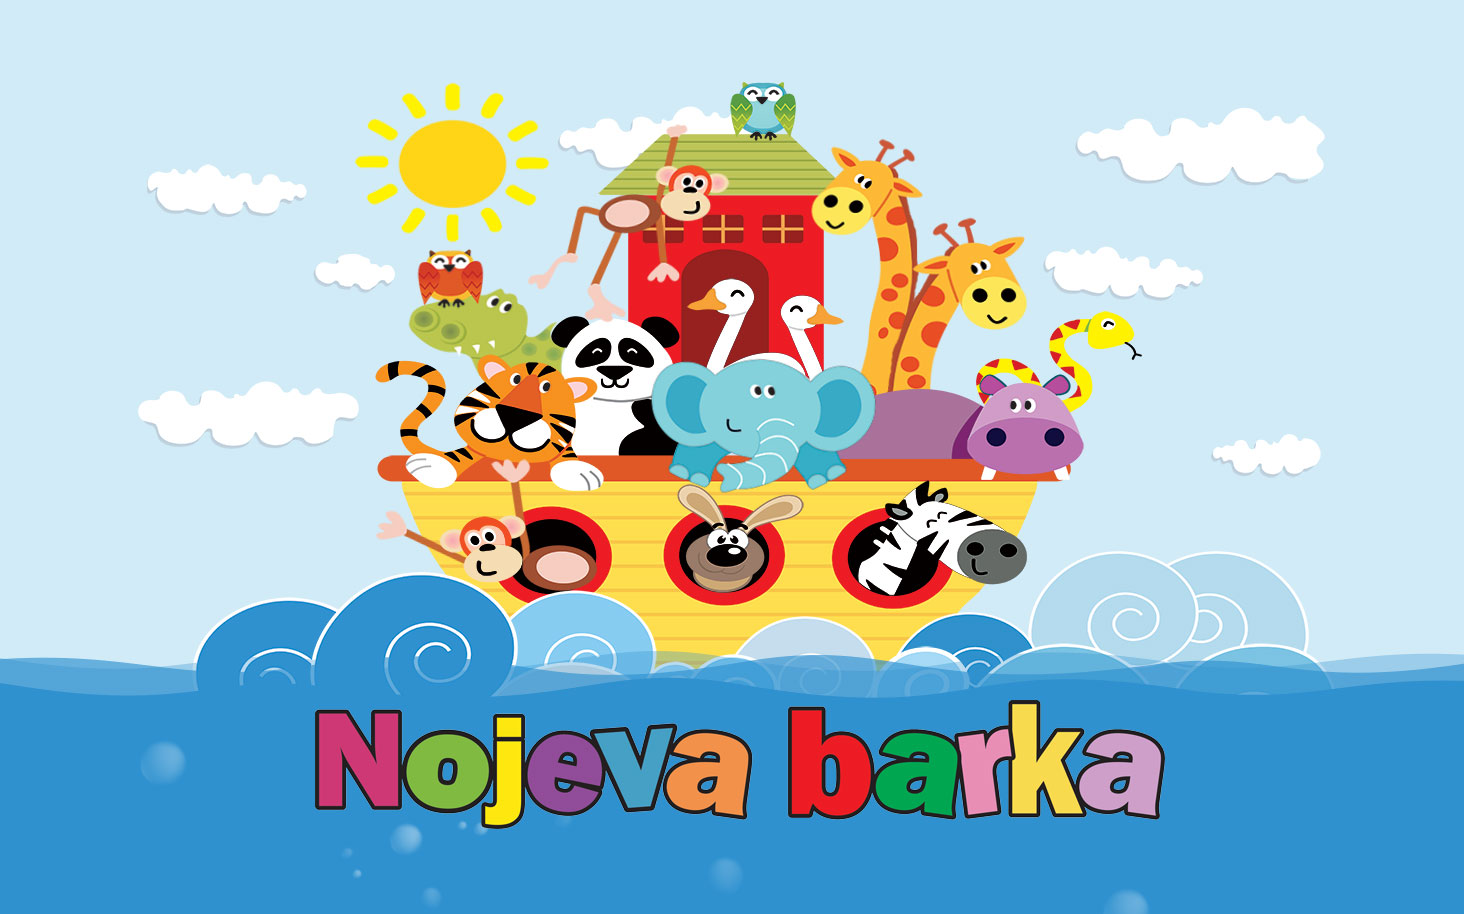 www.nojeva-barka.rs